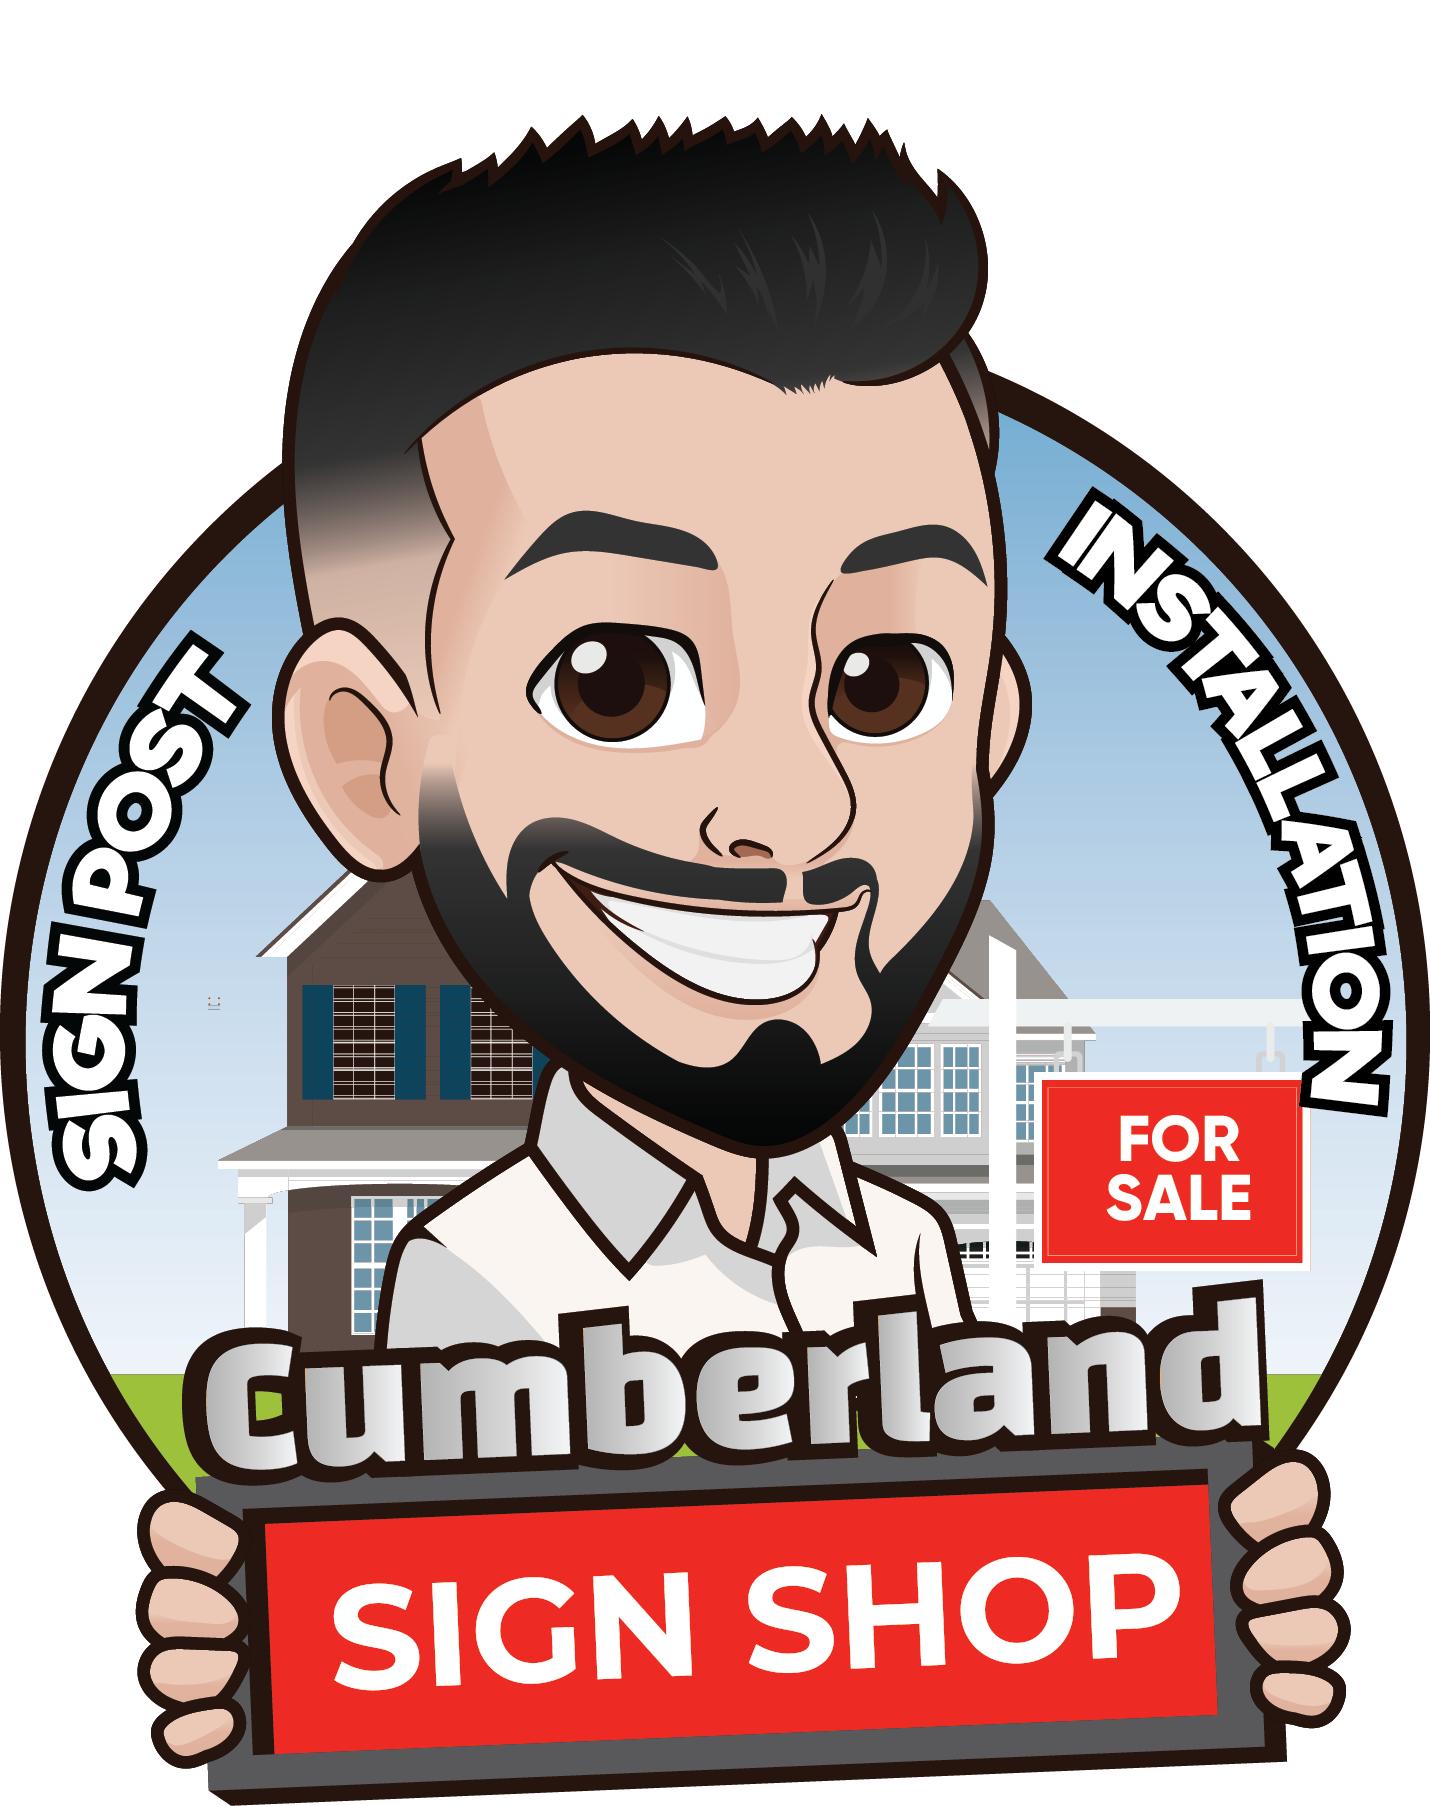 Cumberland Sign Shop